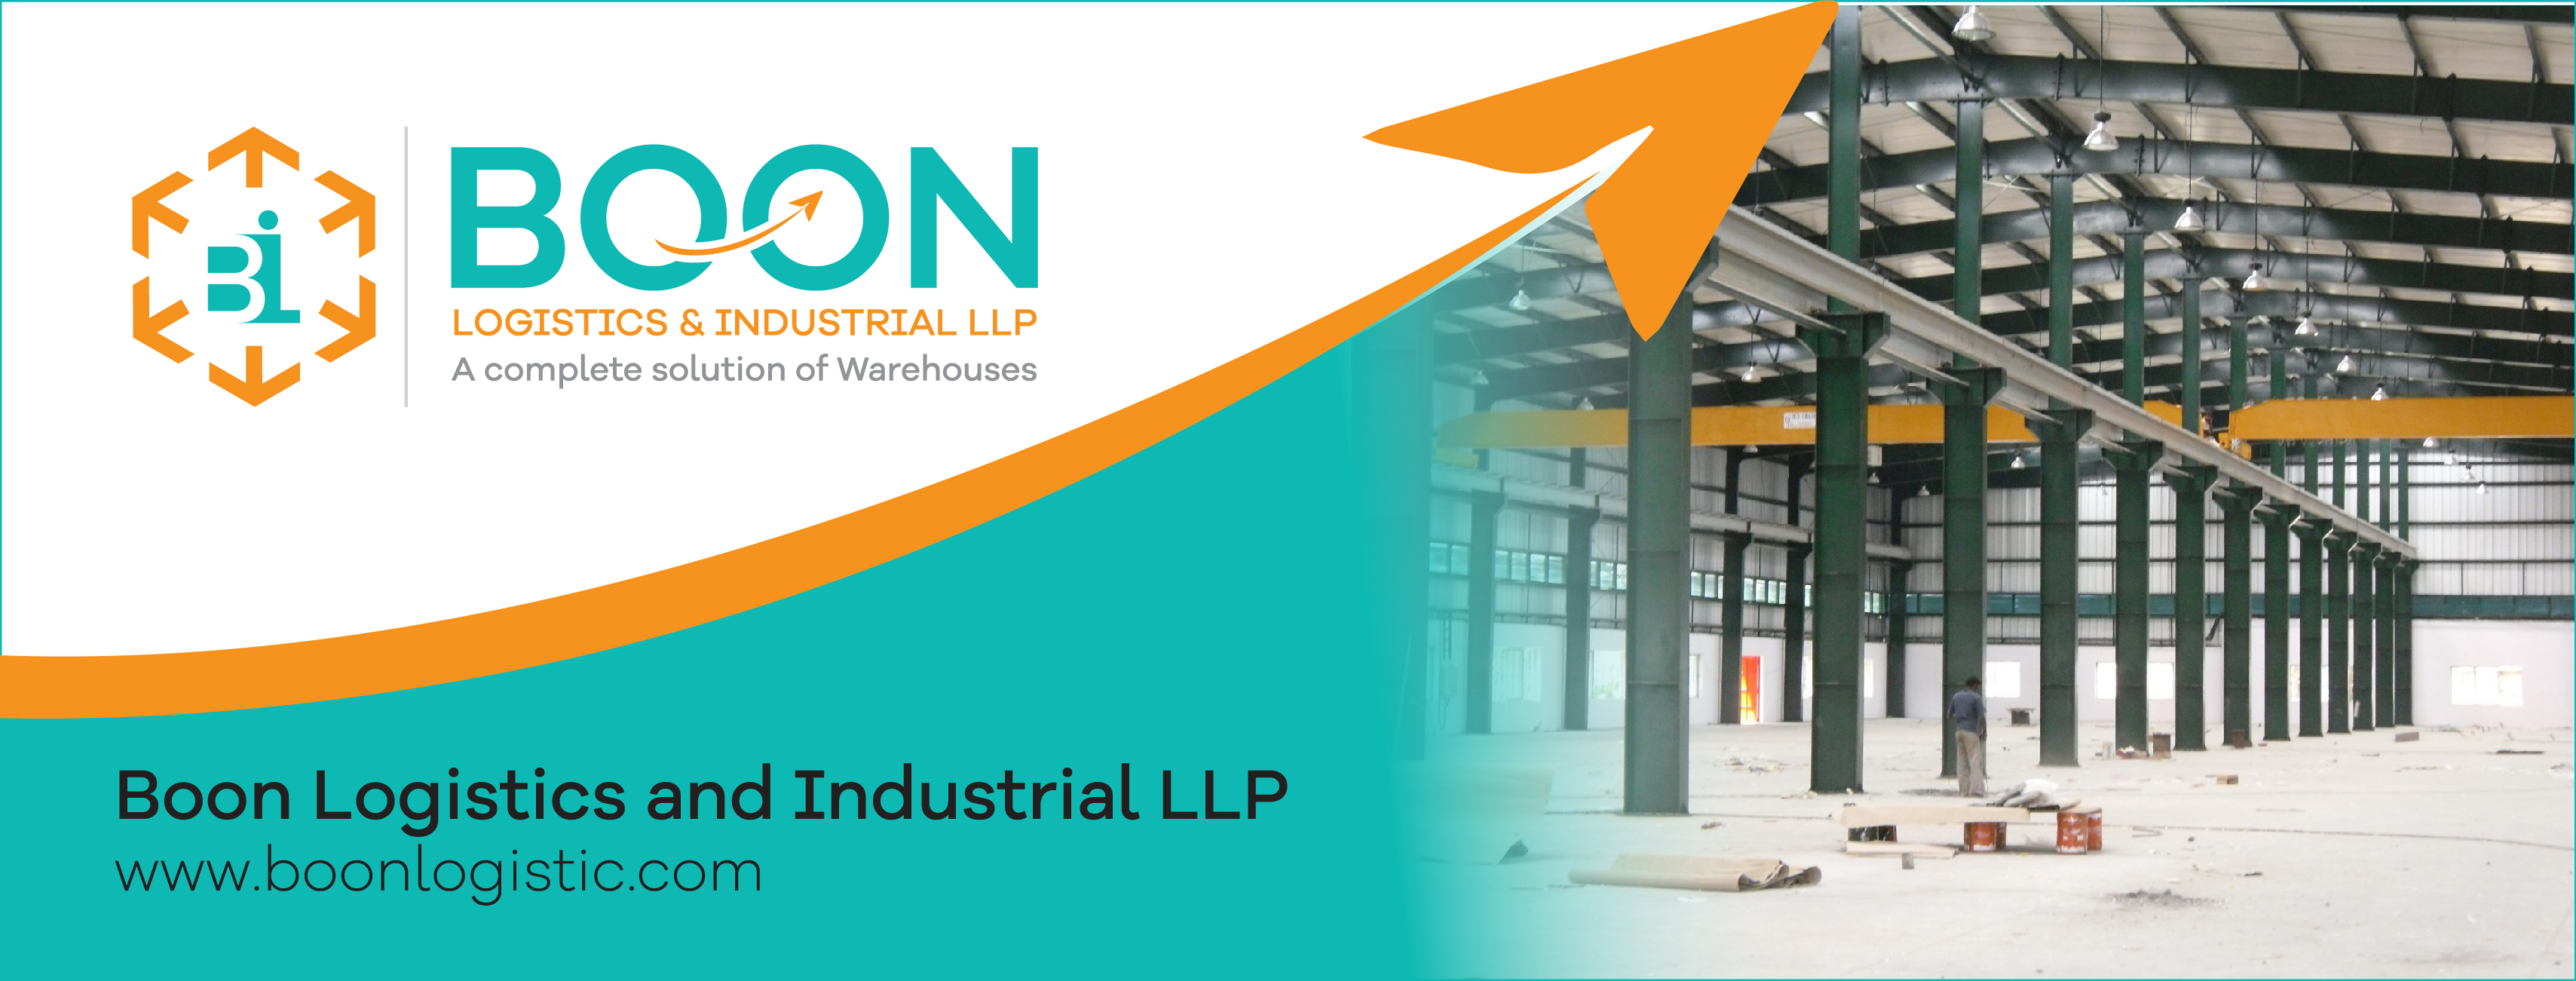 BOON Logistics & Industrial LLP | Home